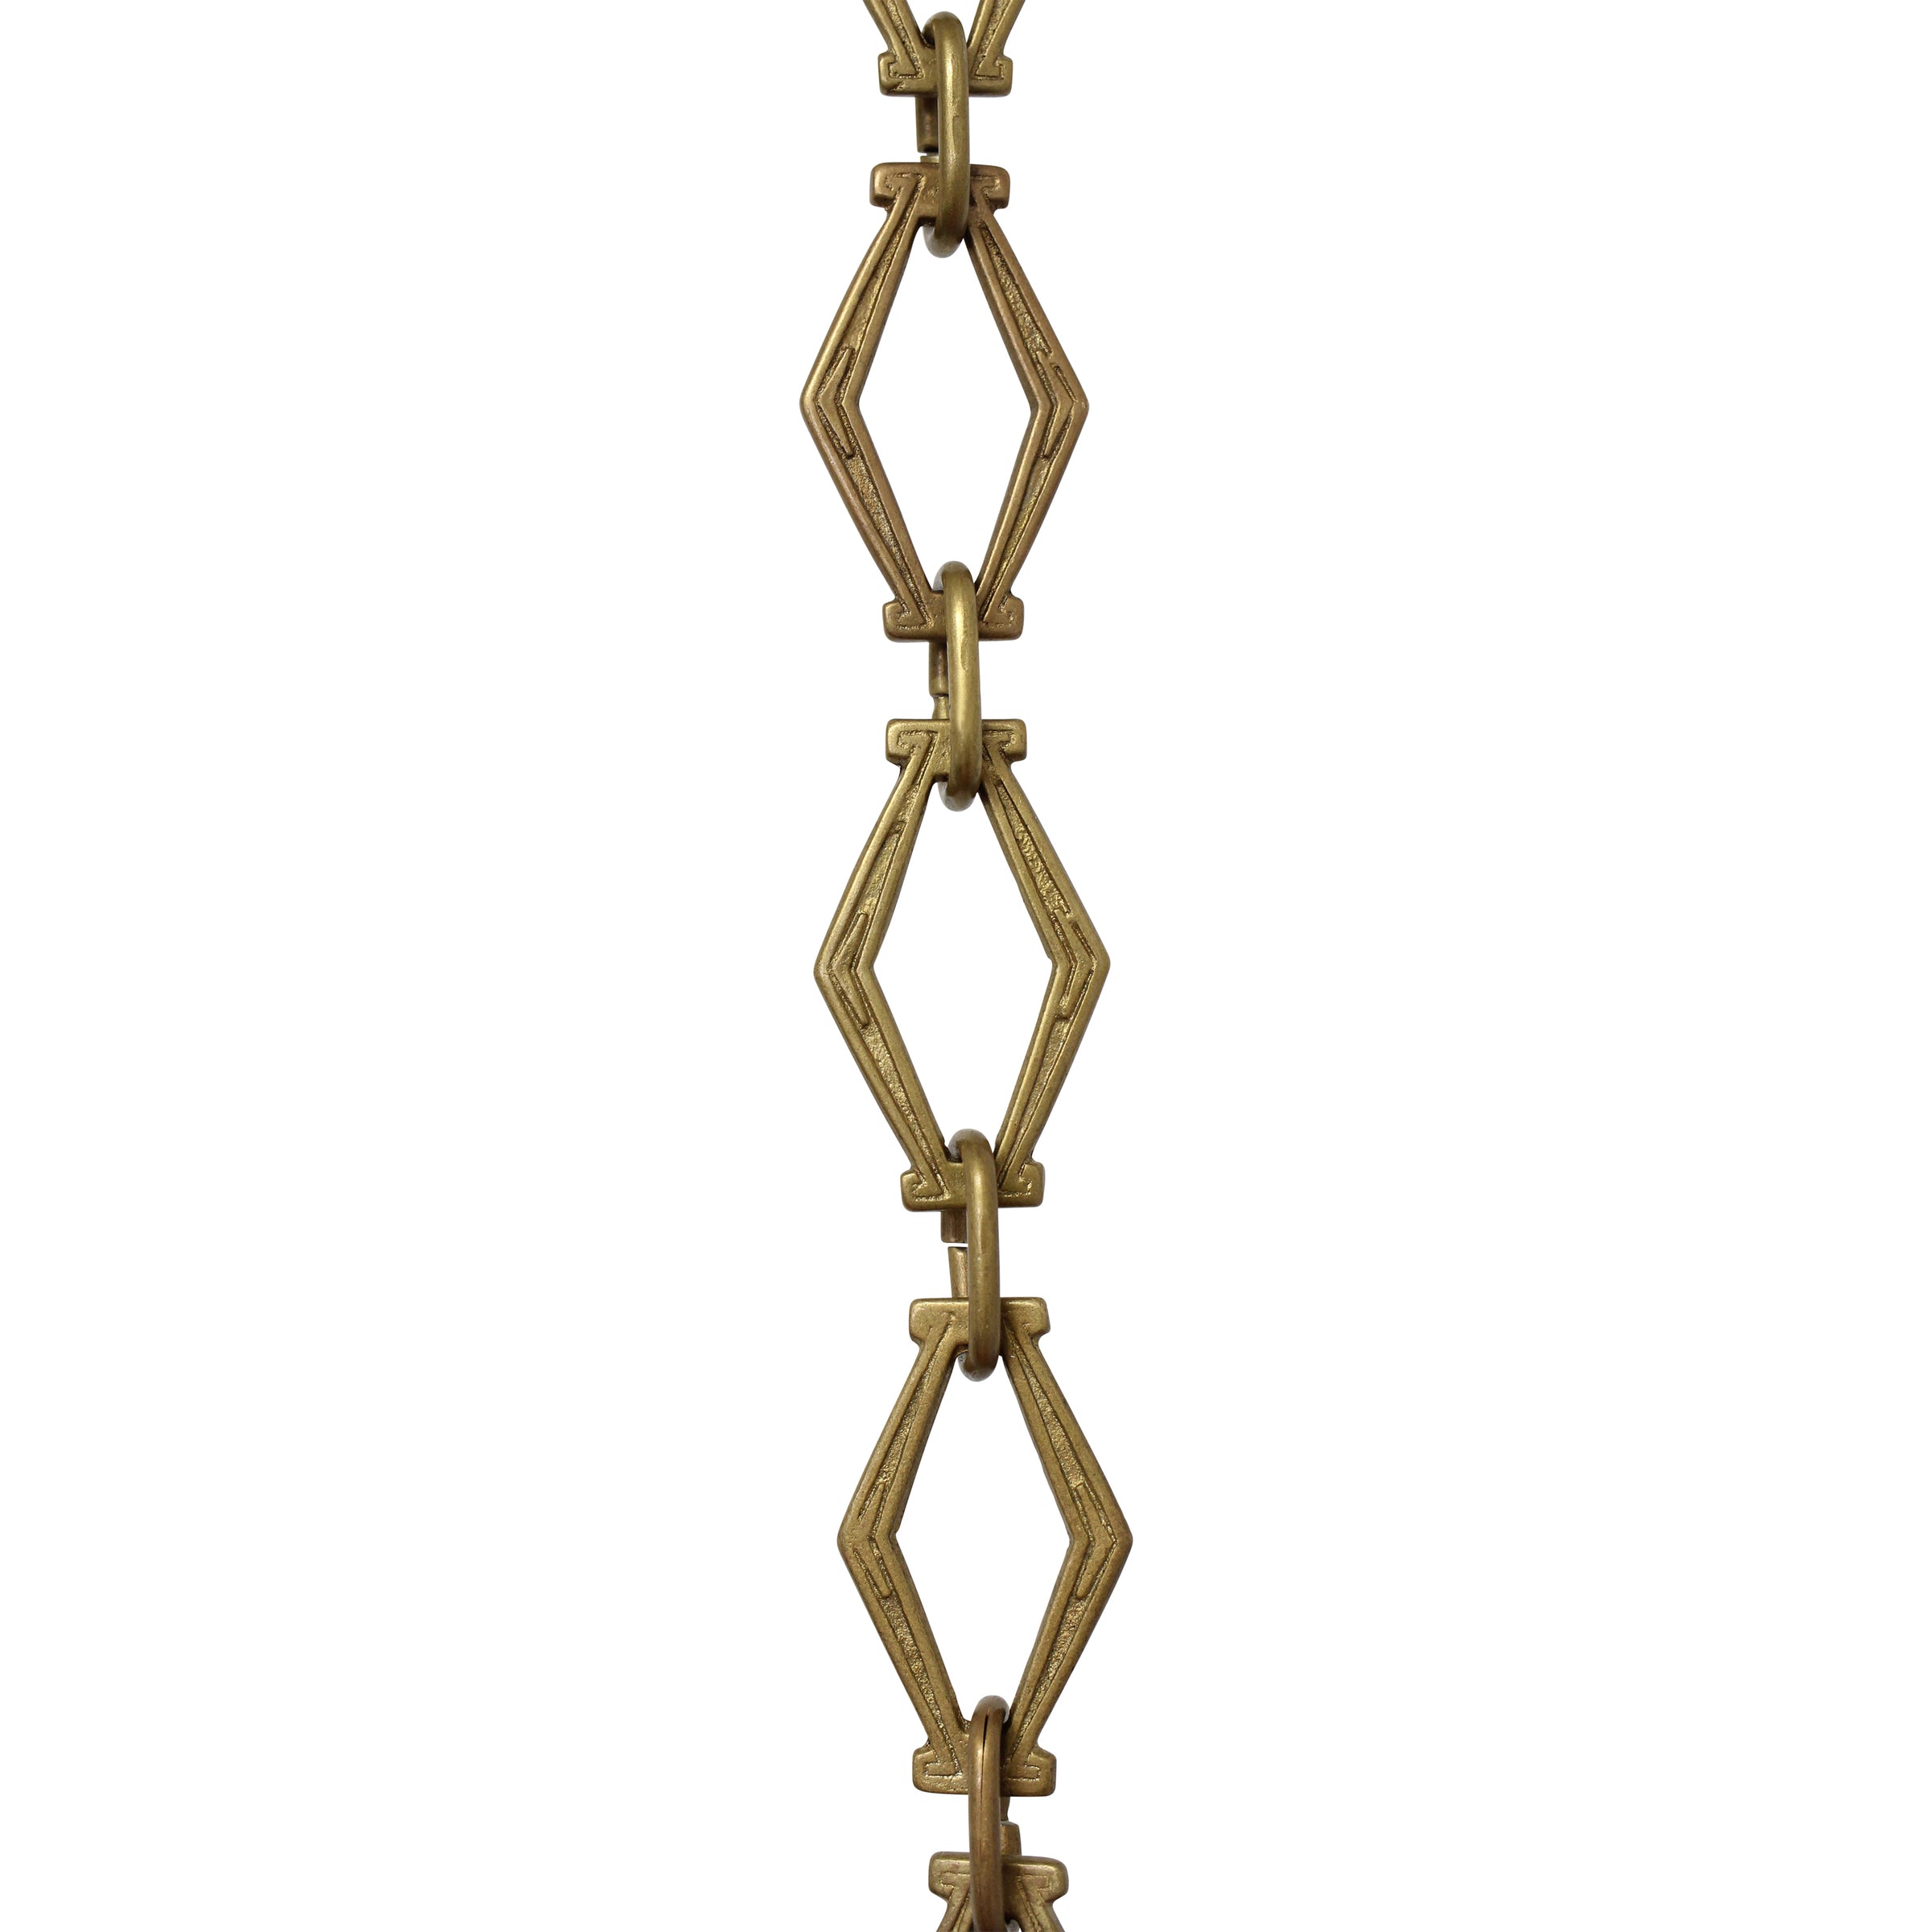 Hexagonal Decorative Link Solid Brass Chandelier Chain